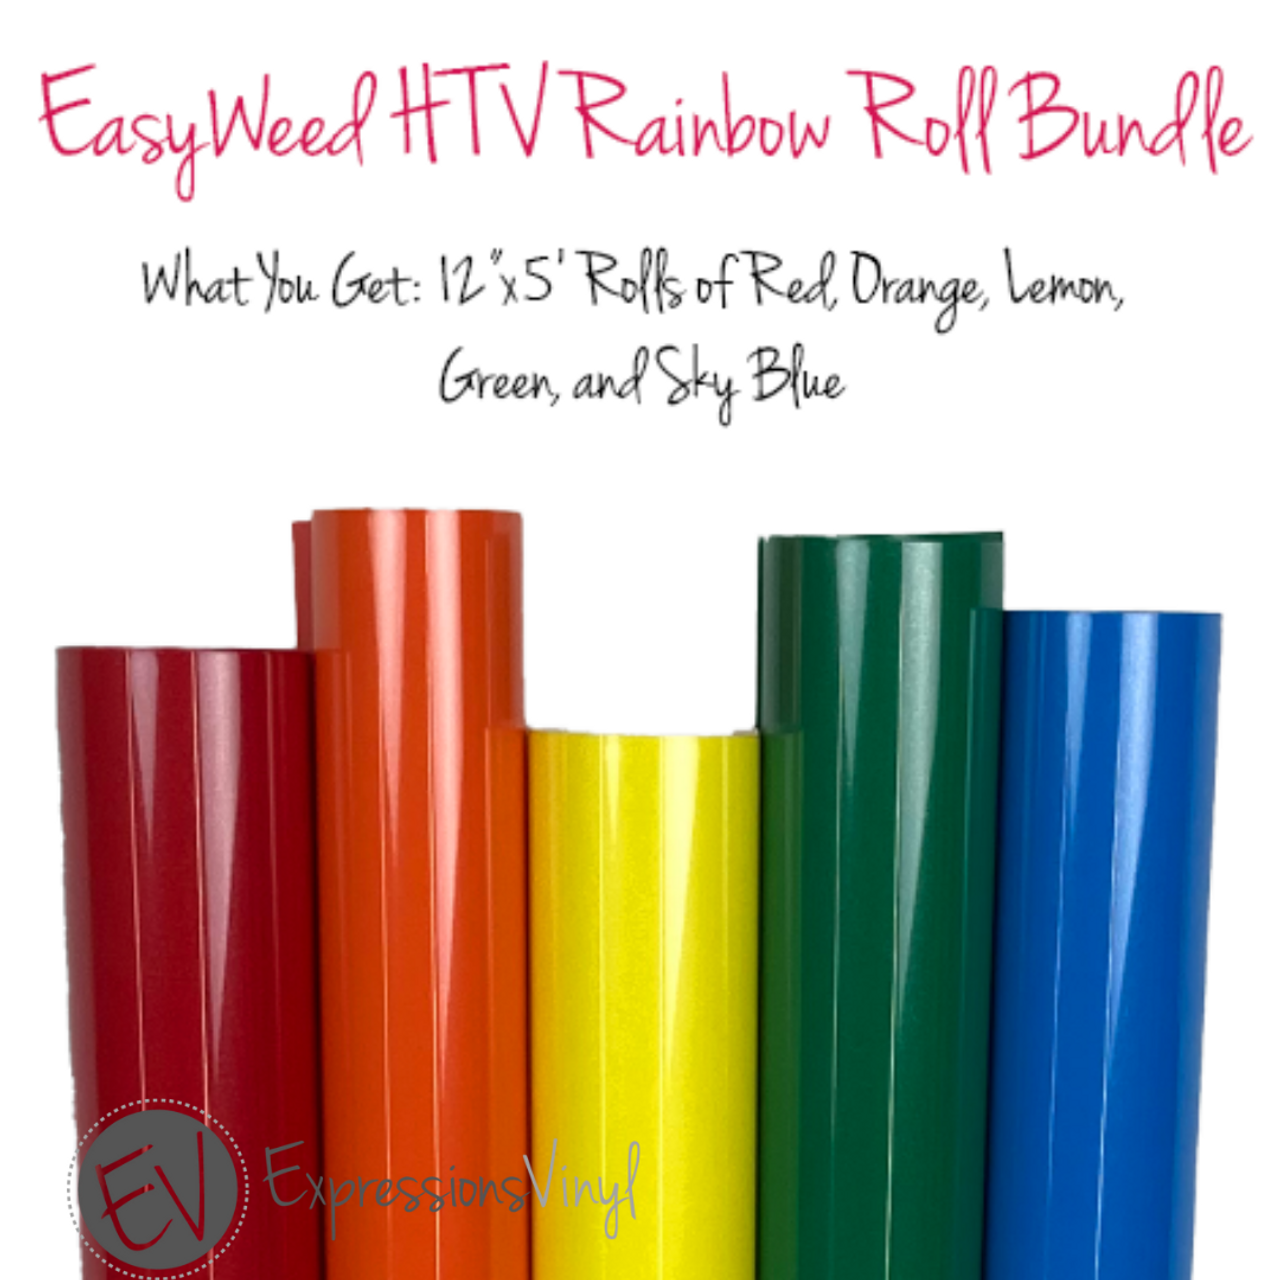 EasyWeed HTV Rainbow 5ft. Roll Bundle